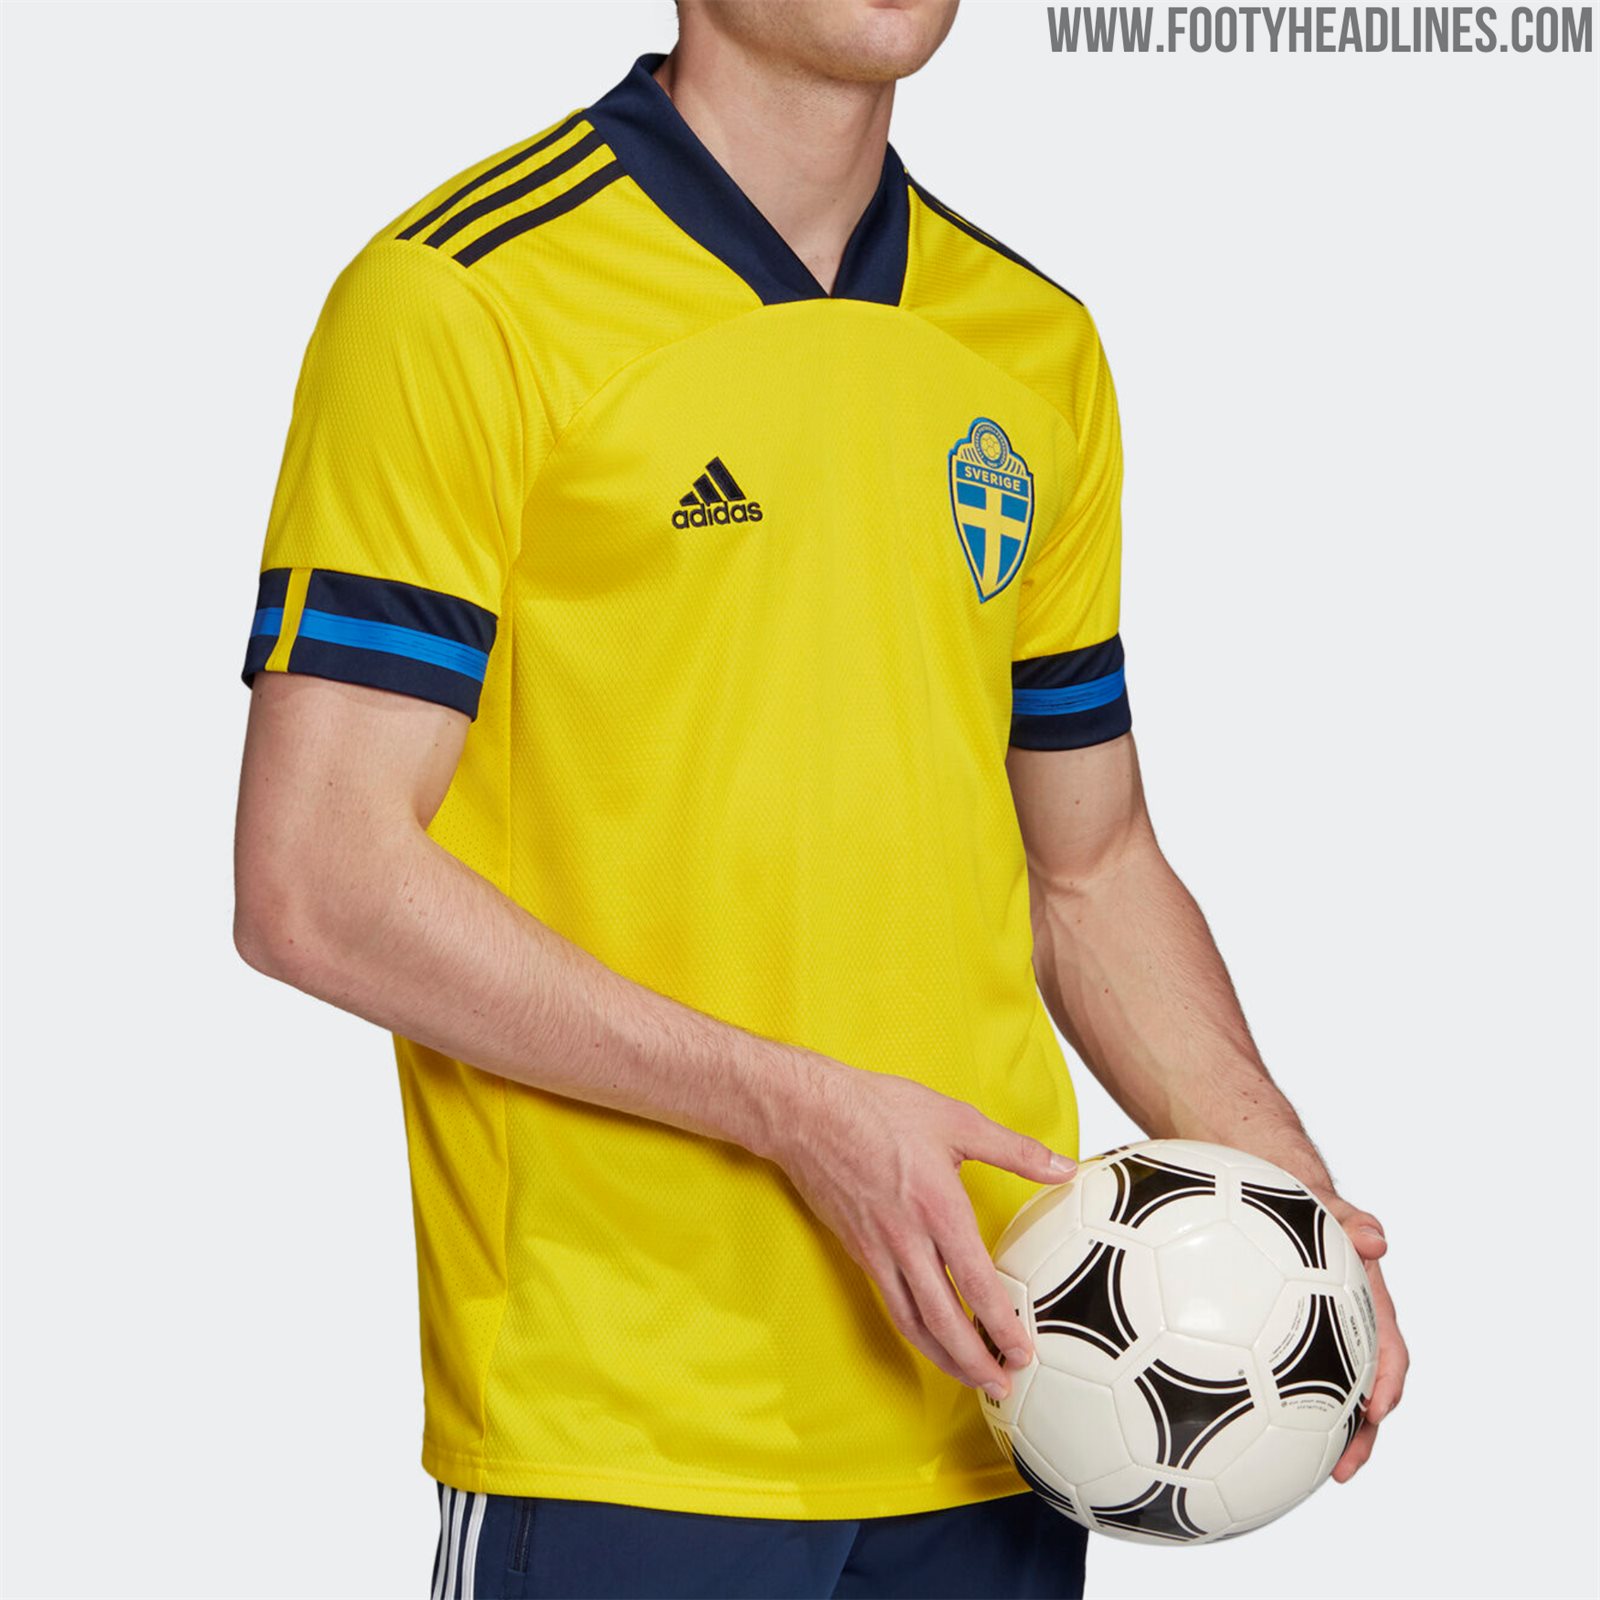 Sweden Euro 2020 Home Kit Released - Footy Headlines